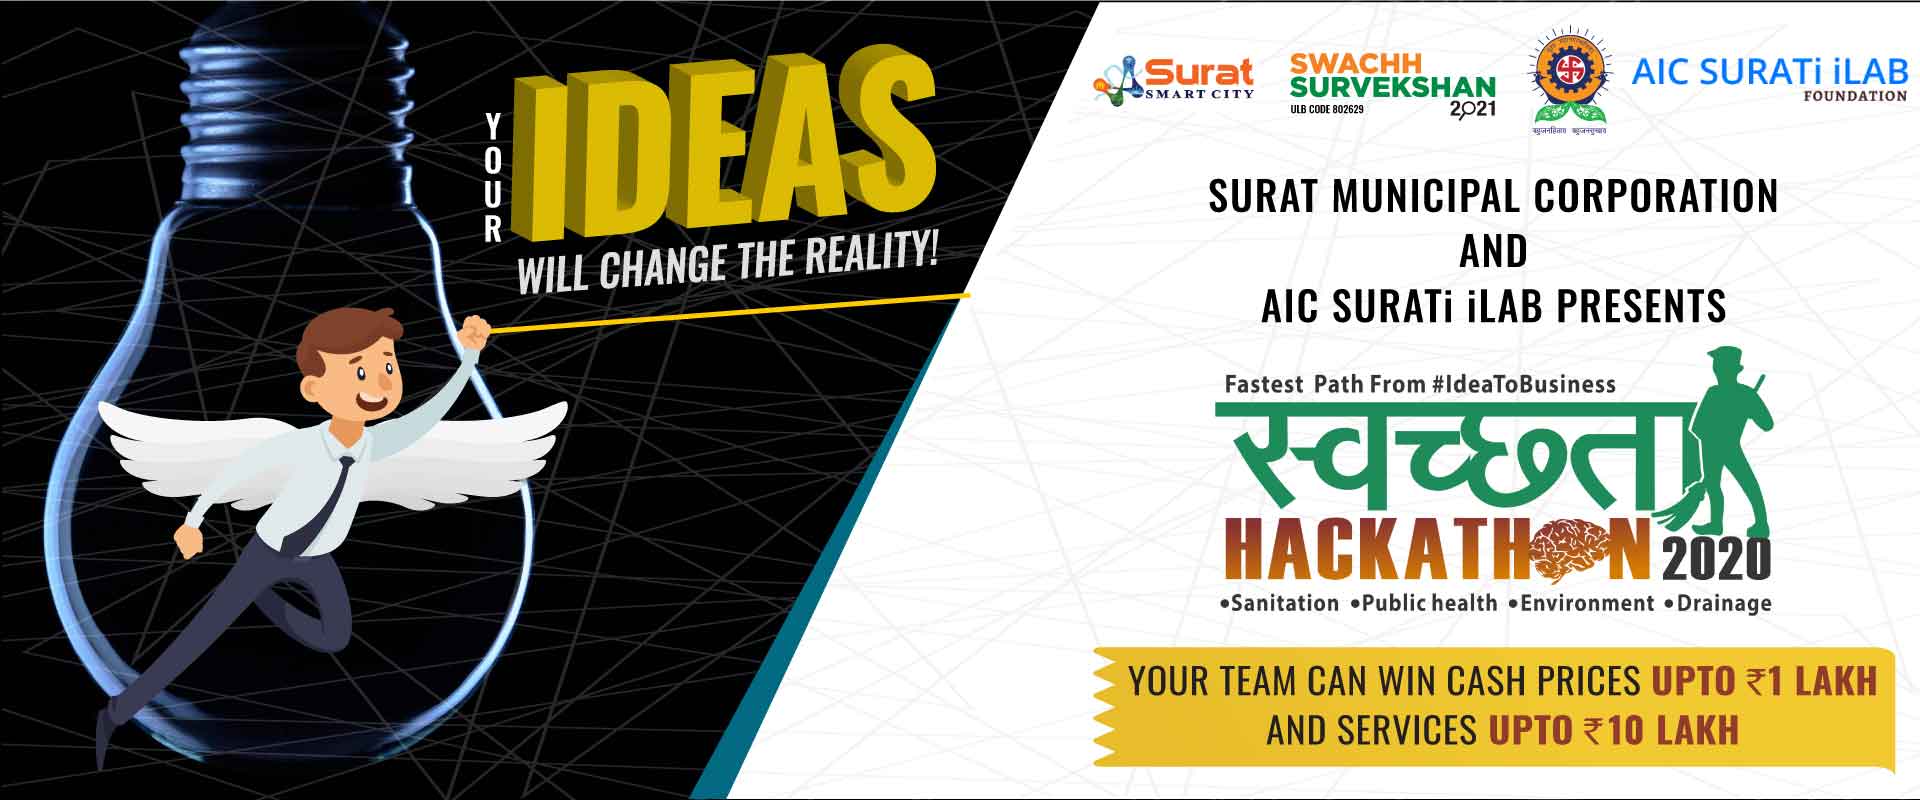 Swachhta Hackathon 2020 - AIC SURATi iLAB Foundation